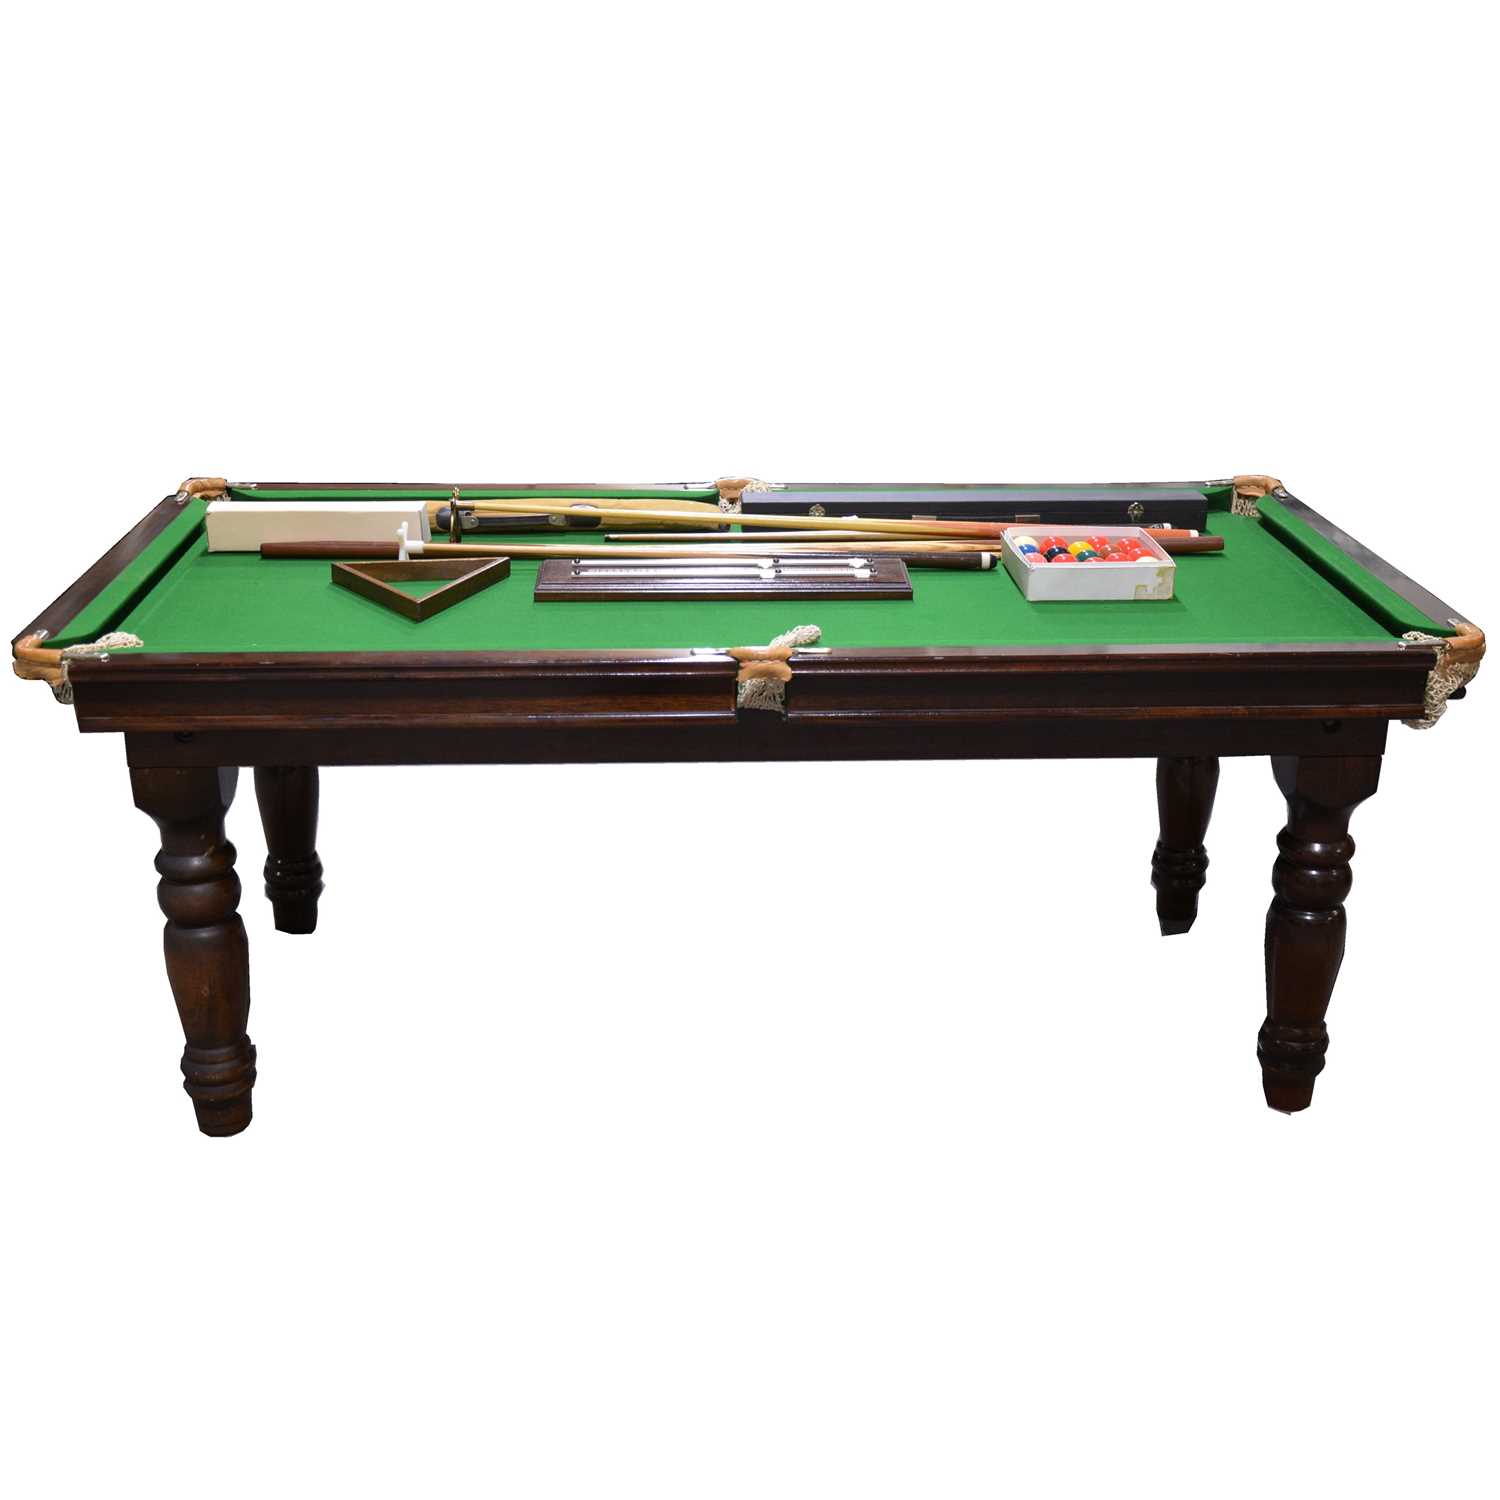 Lot 425 - A modern mahogany dining / snooker table